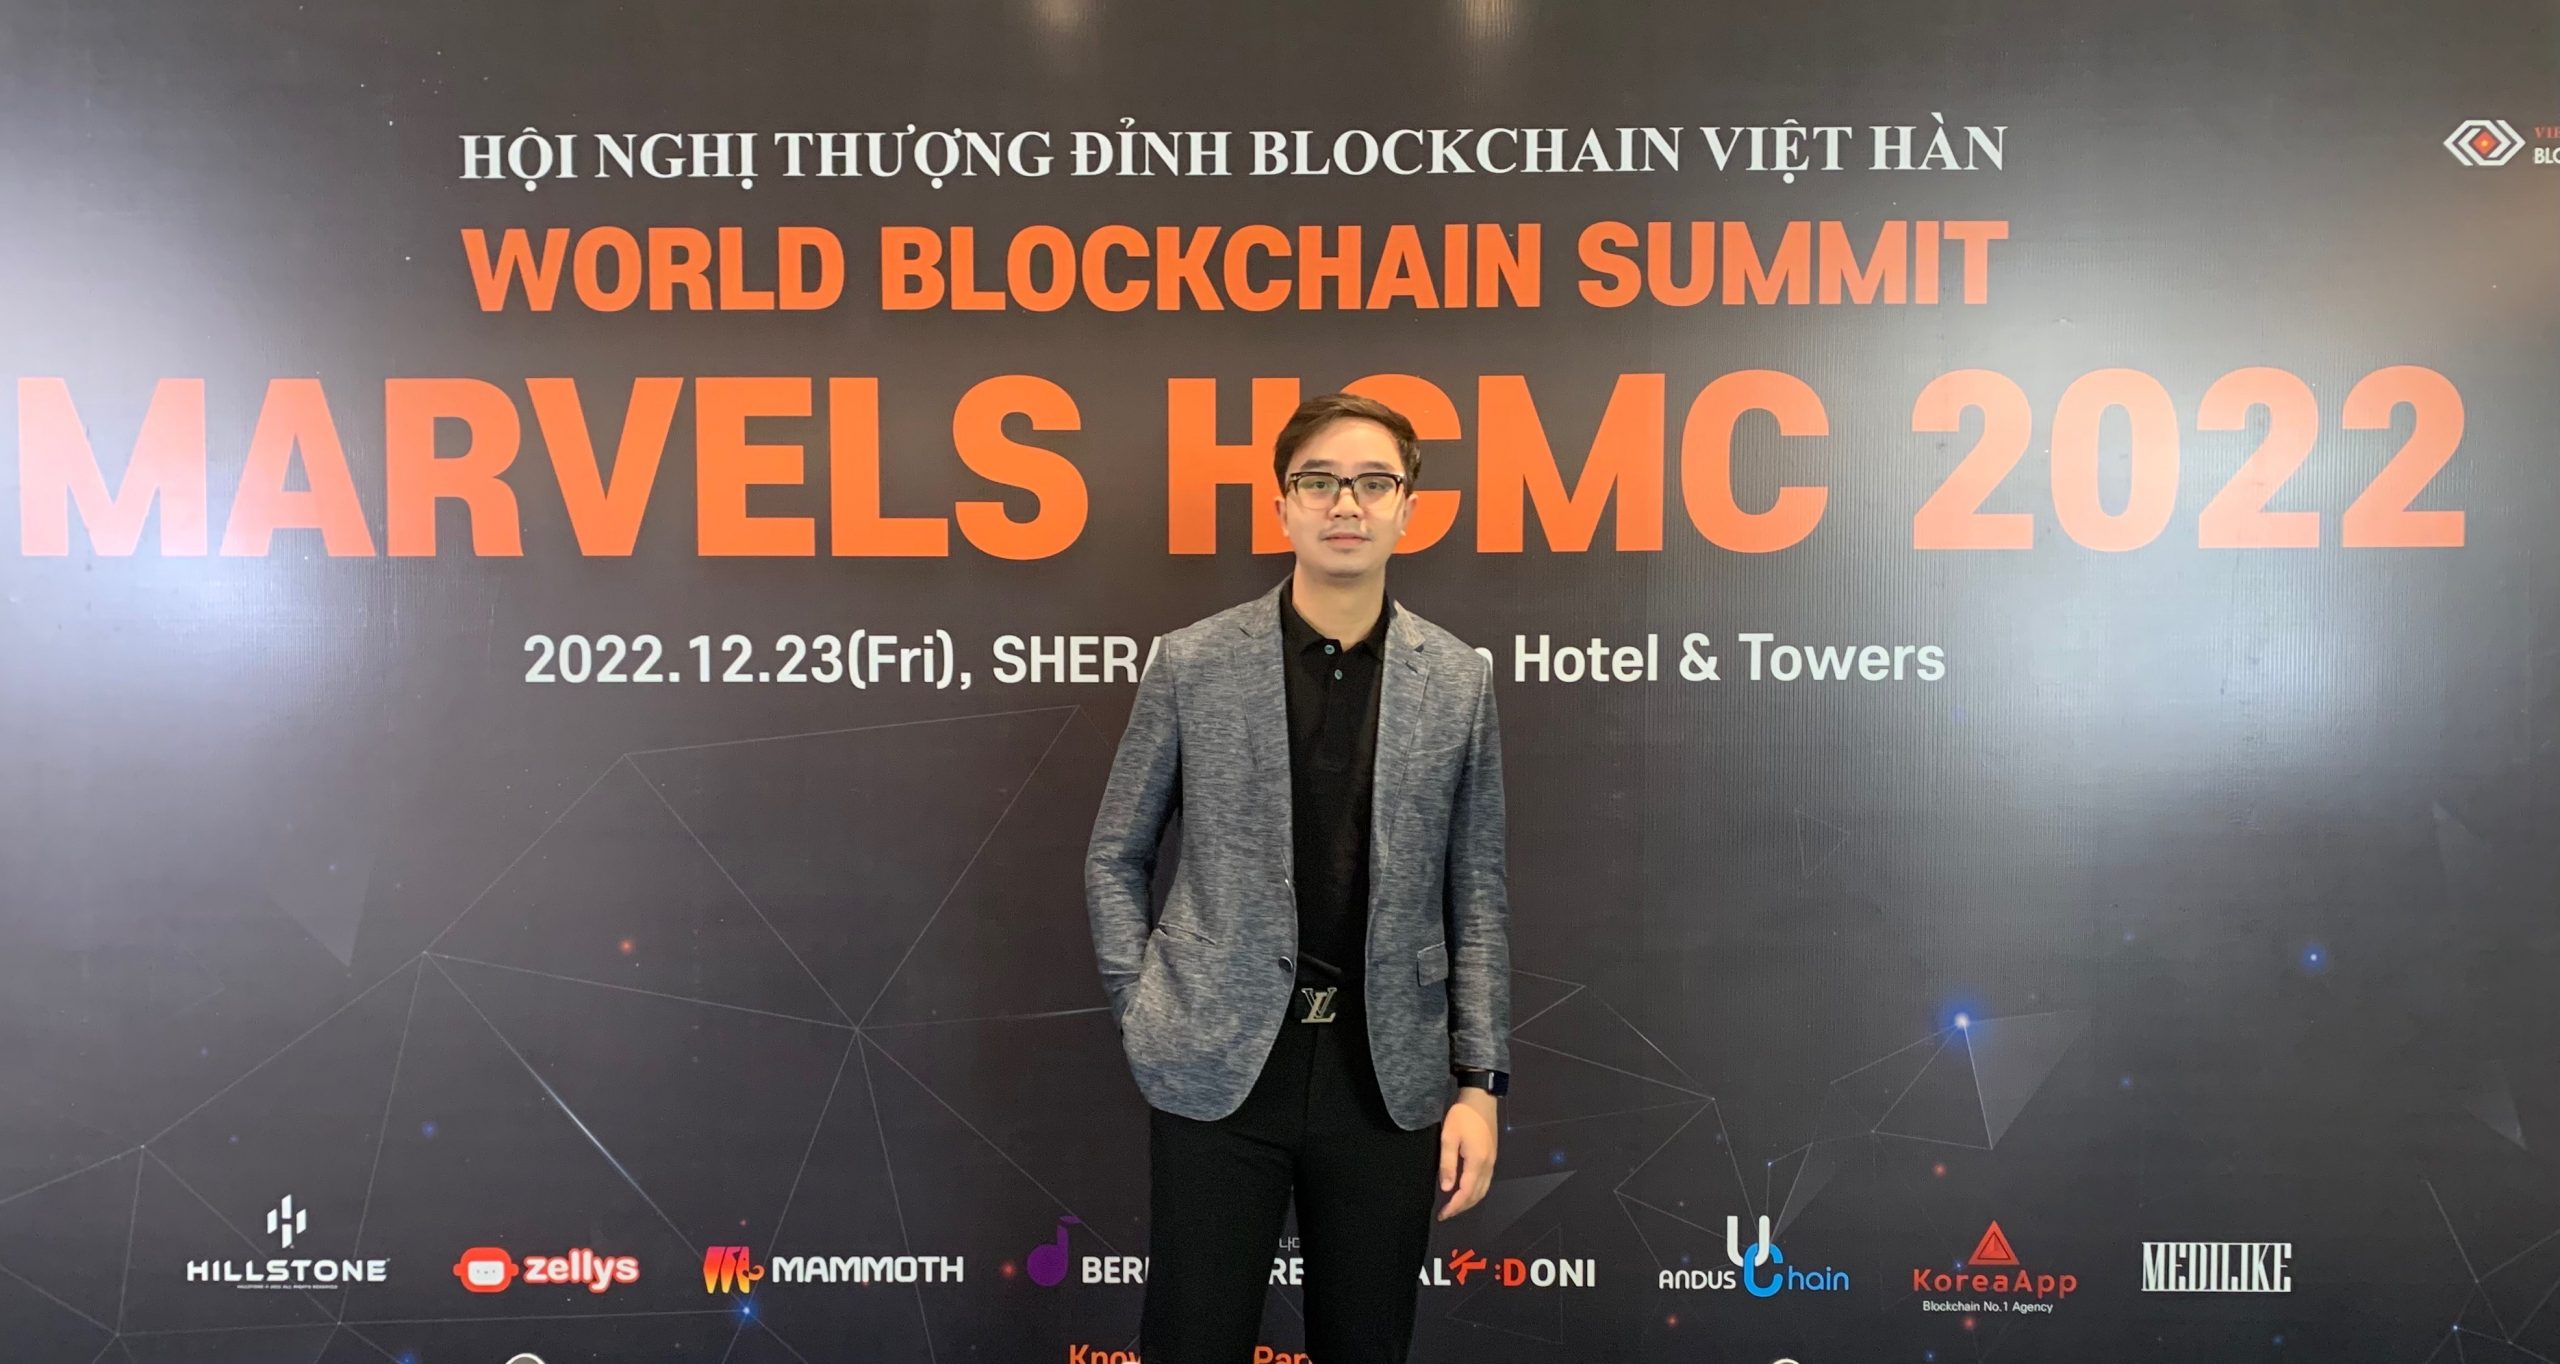 SotaTek representatives at The World Blockchain Summit Marvels HCMC 2022